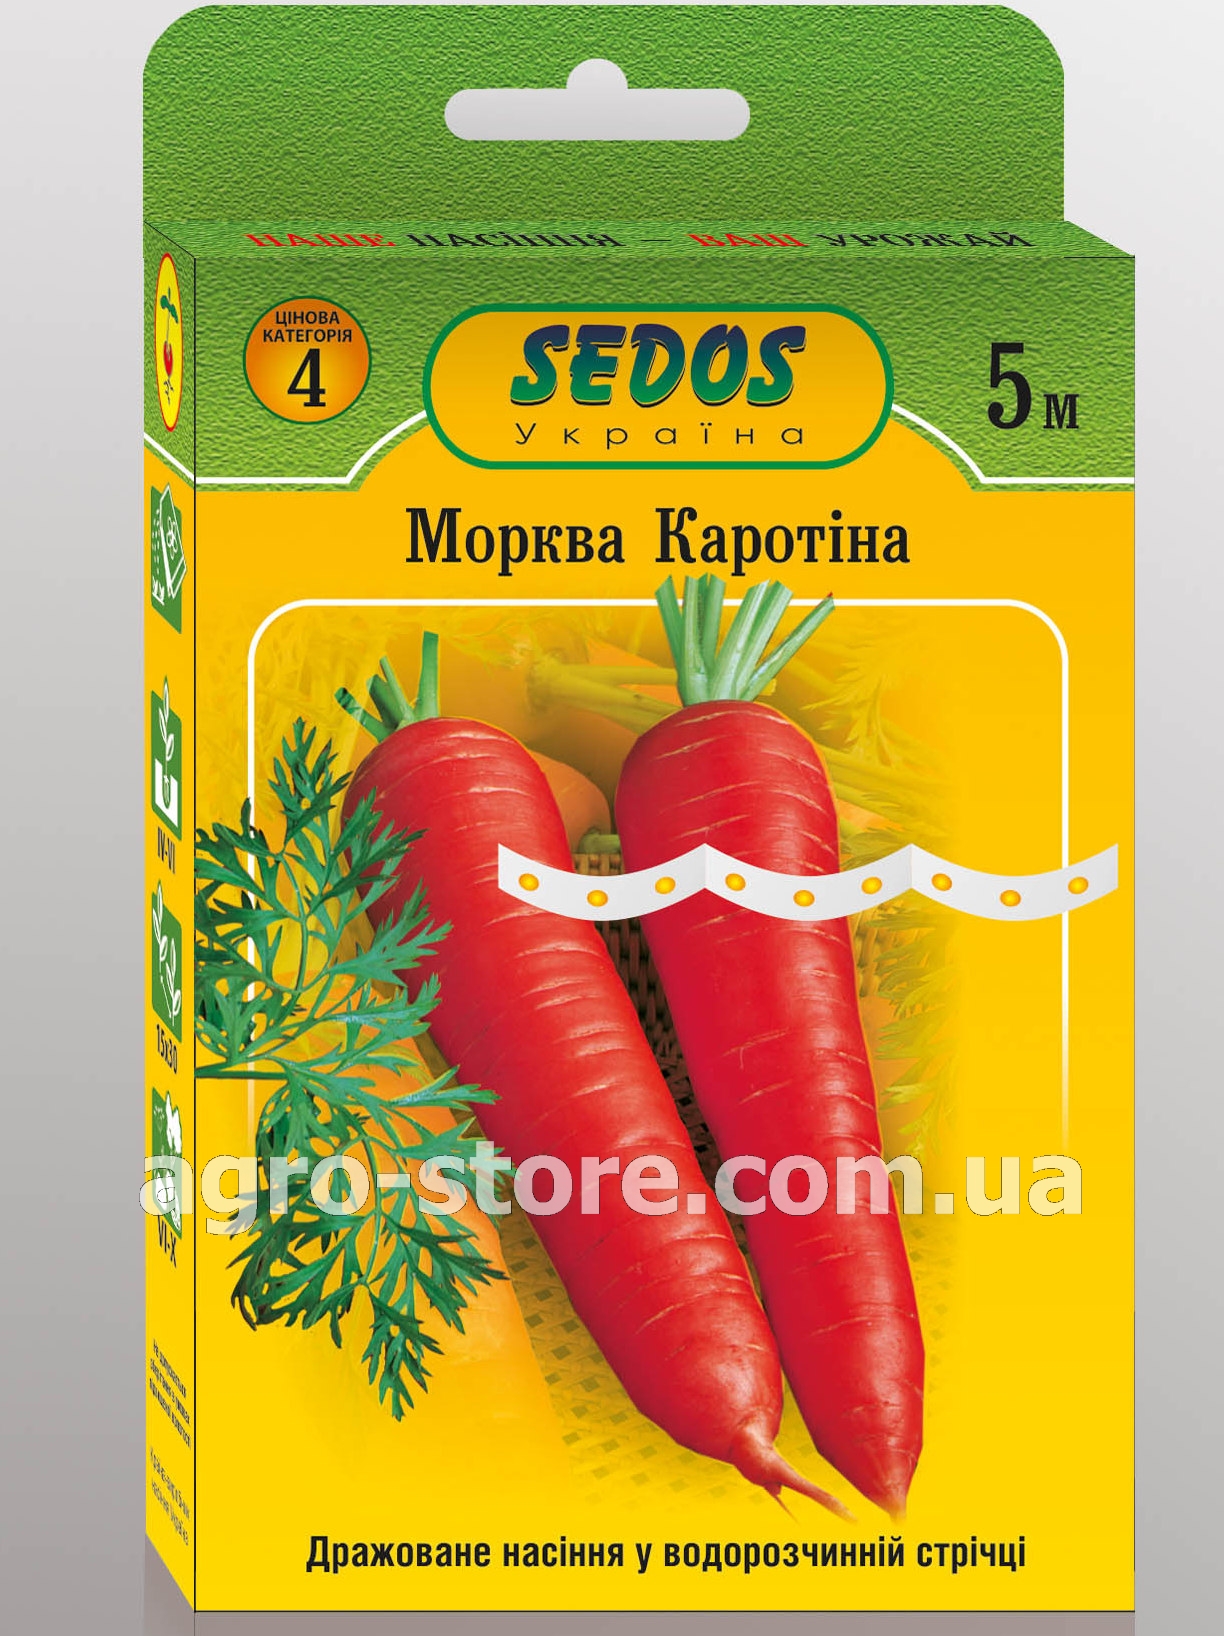 Sedos - Морковь на ленте Каротина (5м) -  семена, товары для сада .